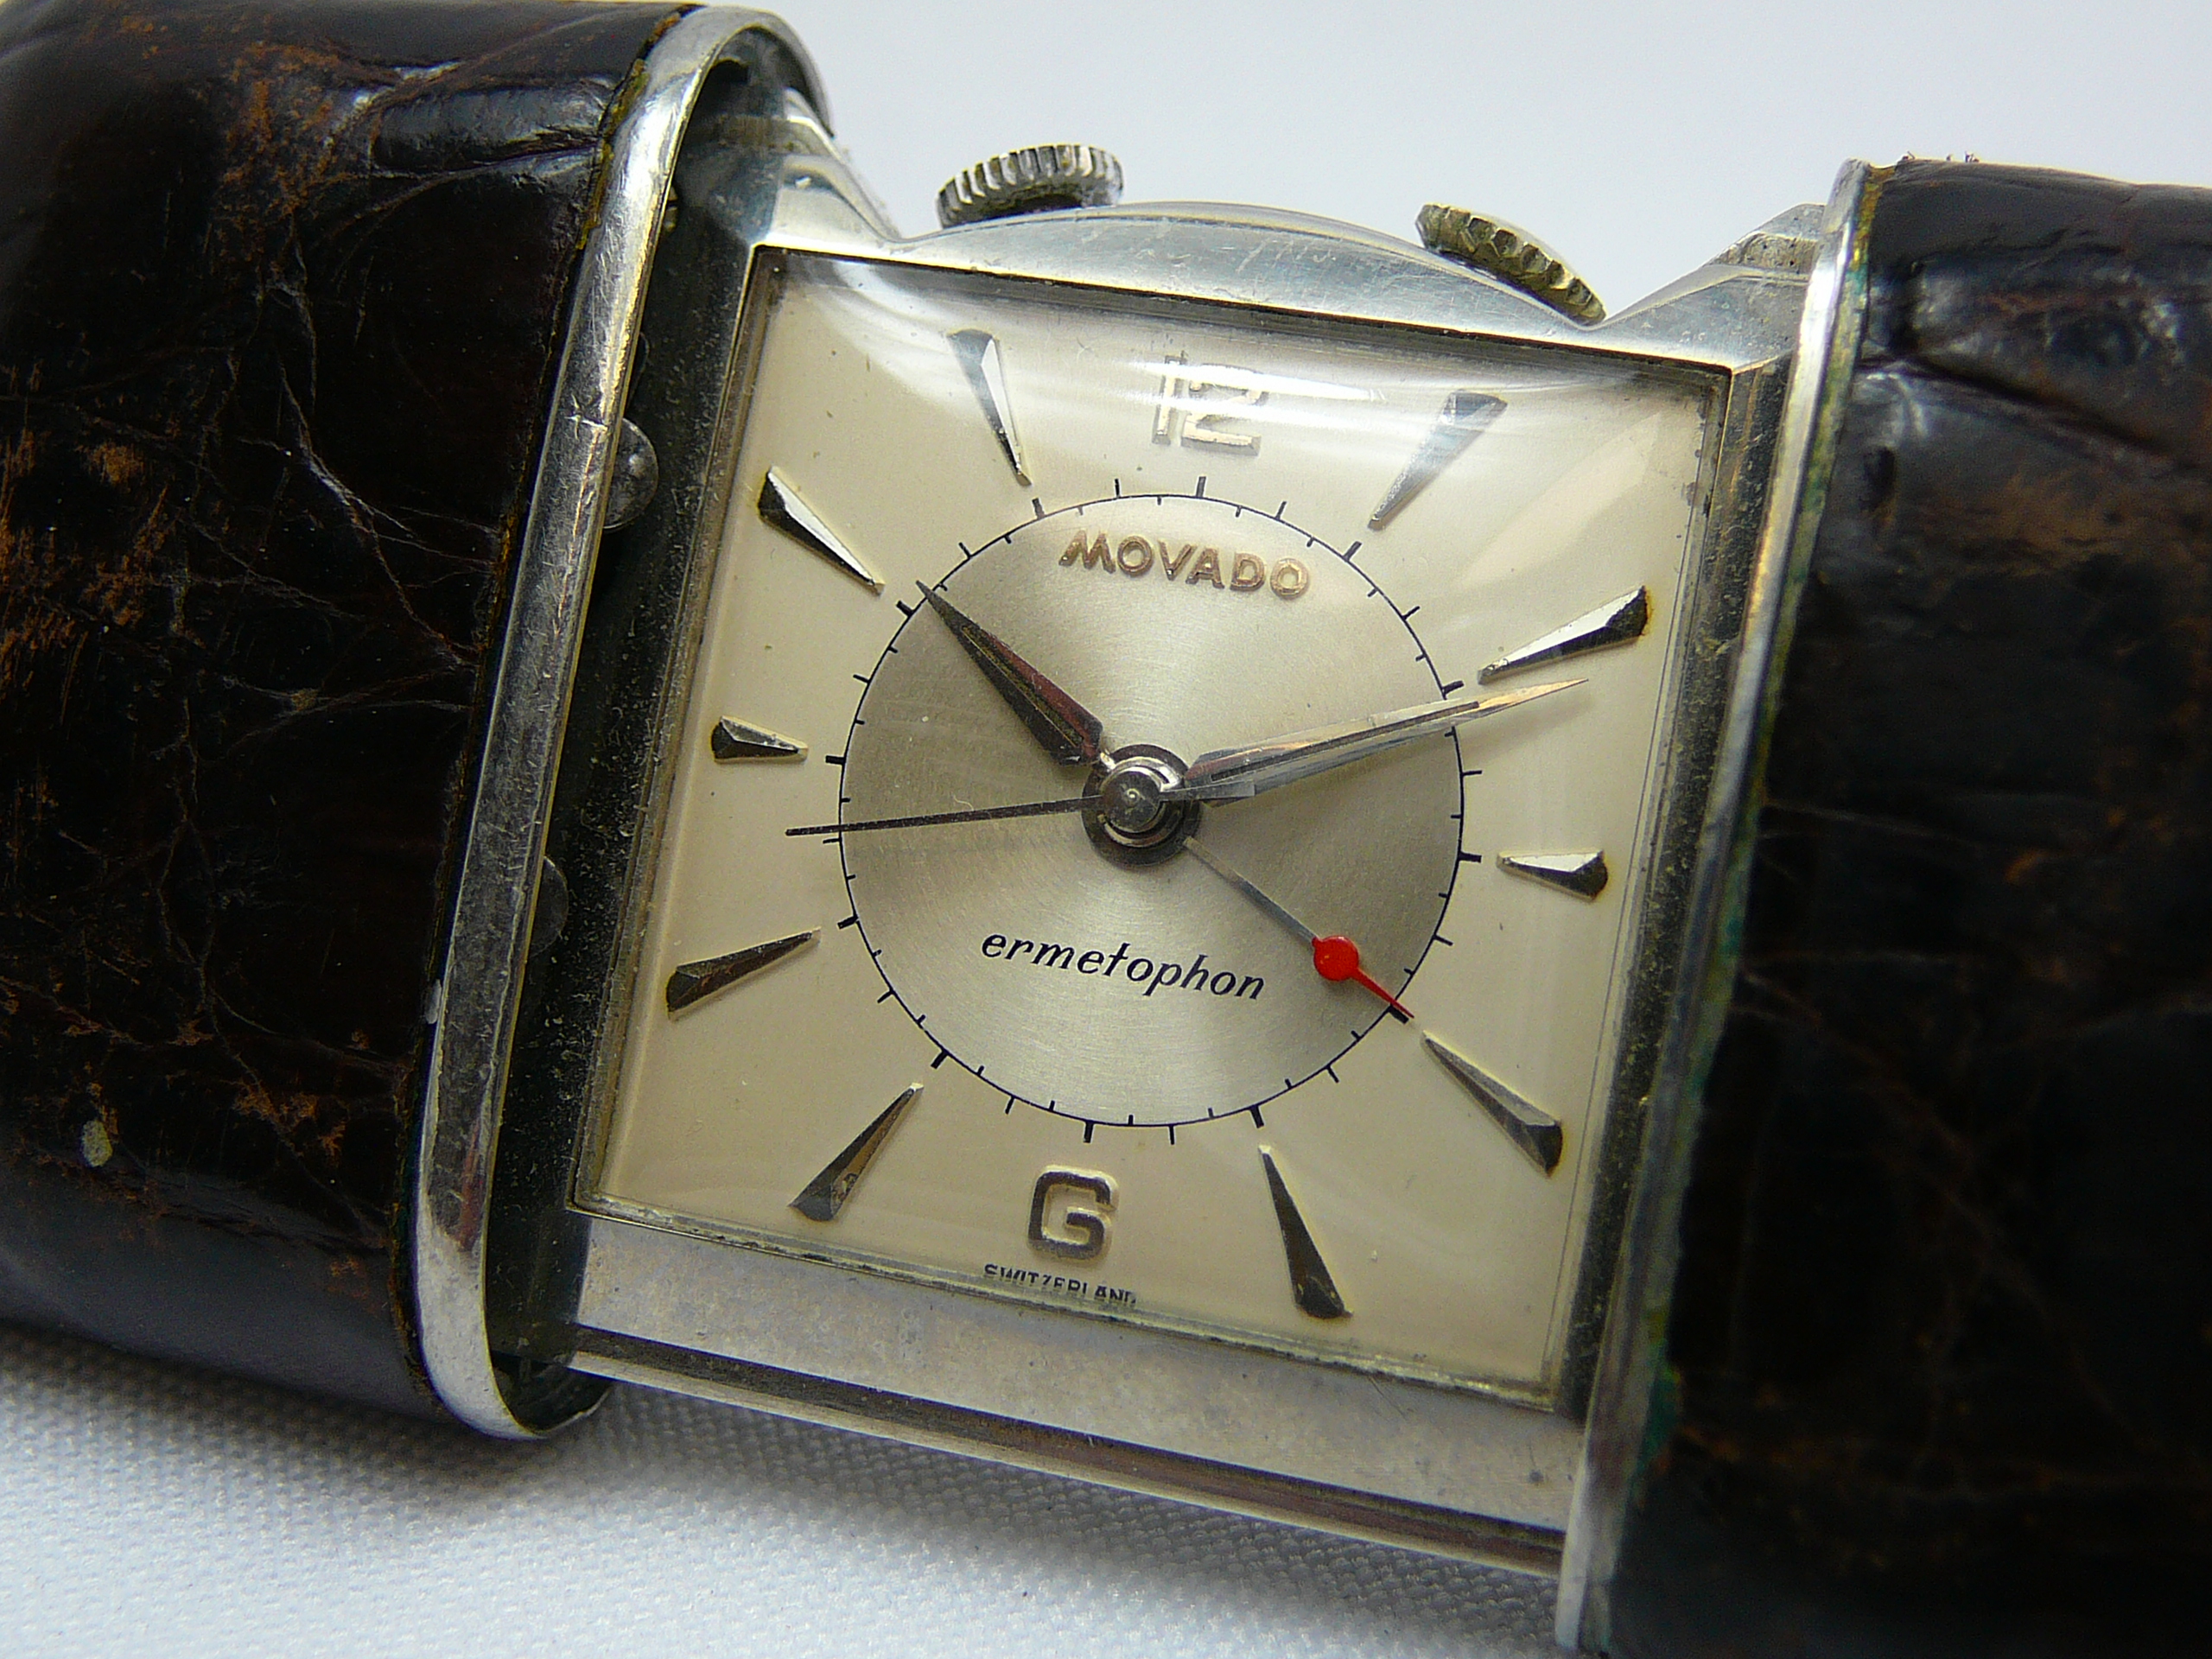 Movado Ermetophon vintage travel clock - Image 3 of 4